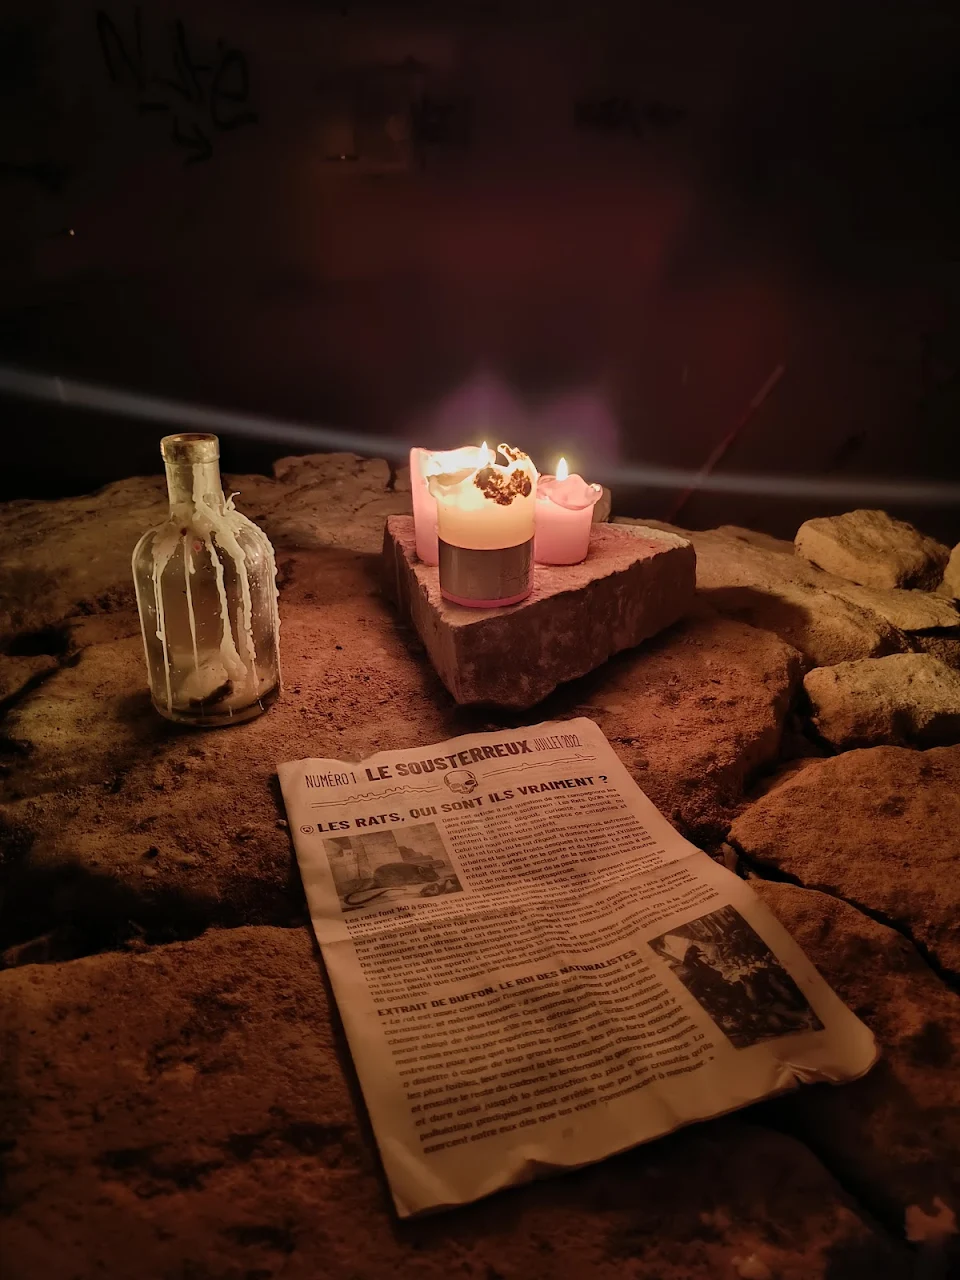 Spent a nice evening in the depths of Paris, found a newspaper left by a fellow explorer